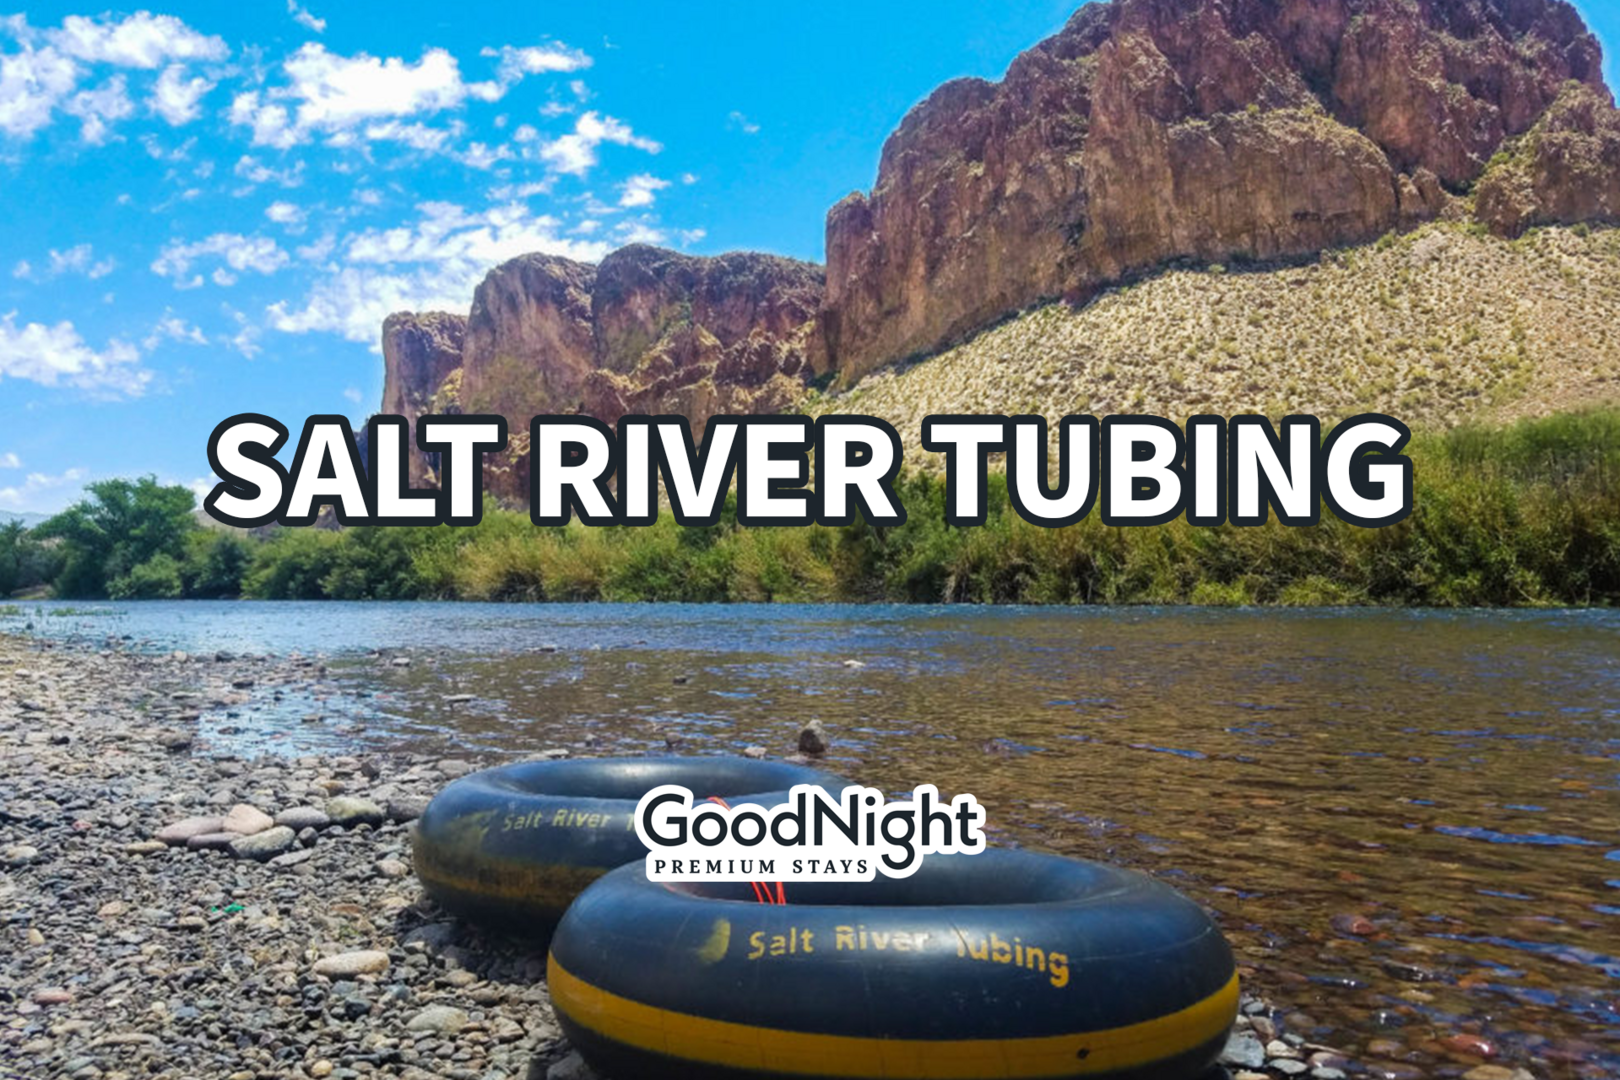 34 mins: Salt River Tubing